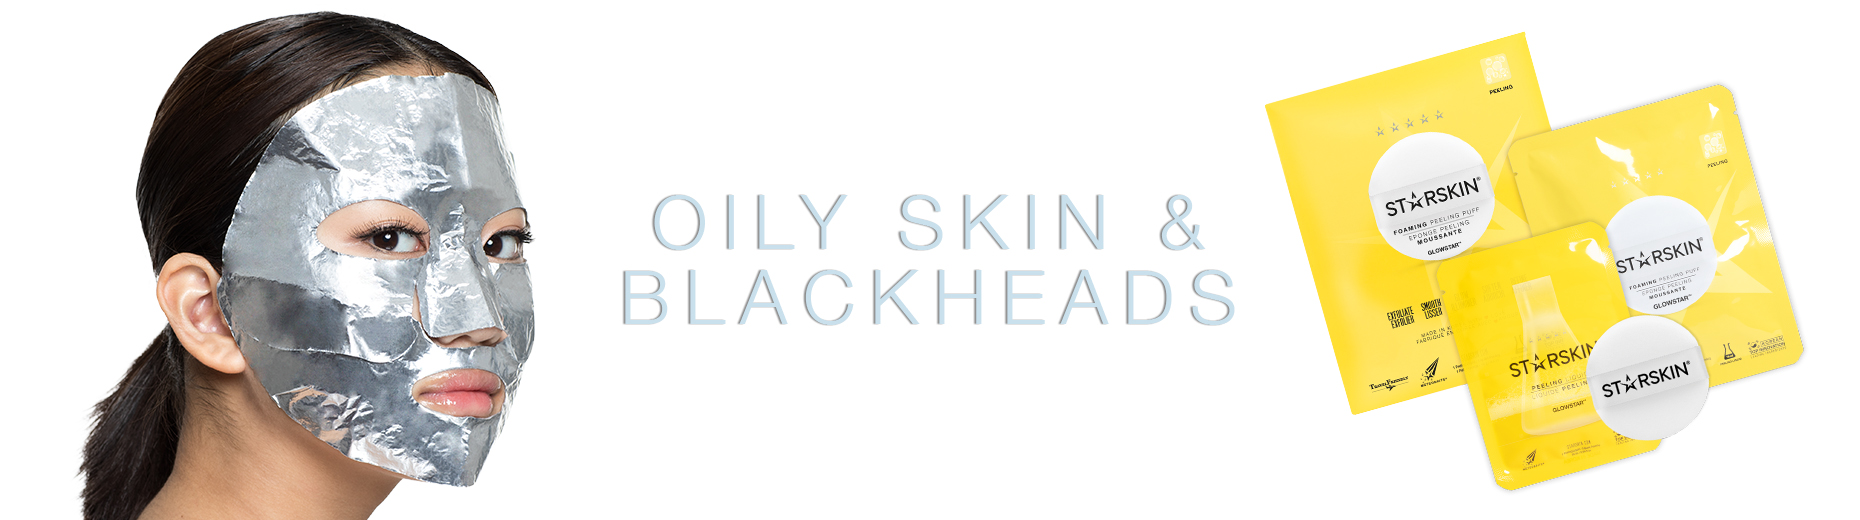 oily skin & blackheads banner platinum peel mask and glowstar peeling puff